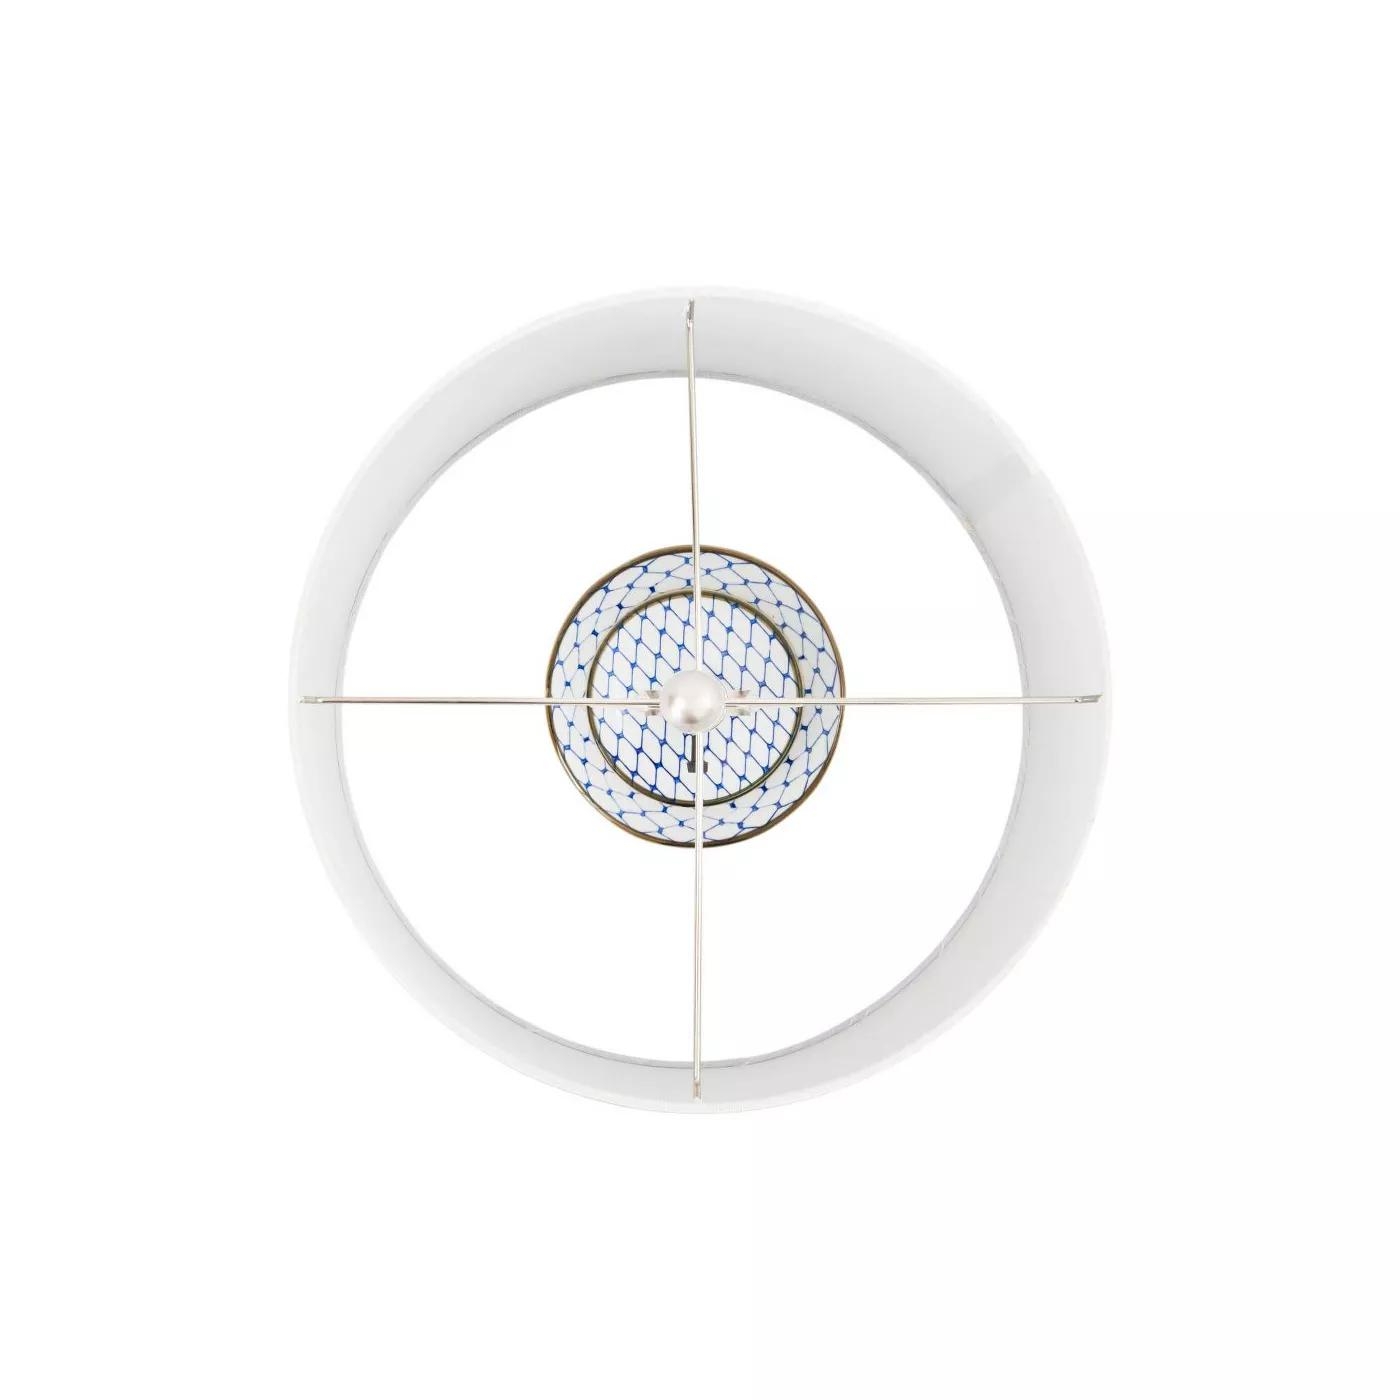 Ceramic Table lamp with Linen Shade, Indigo & White - Image 1